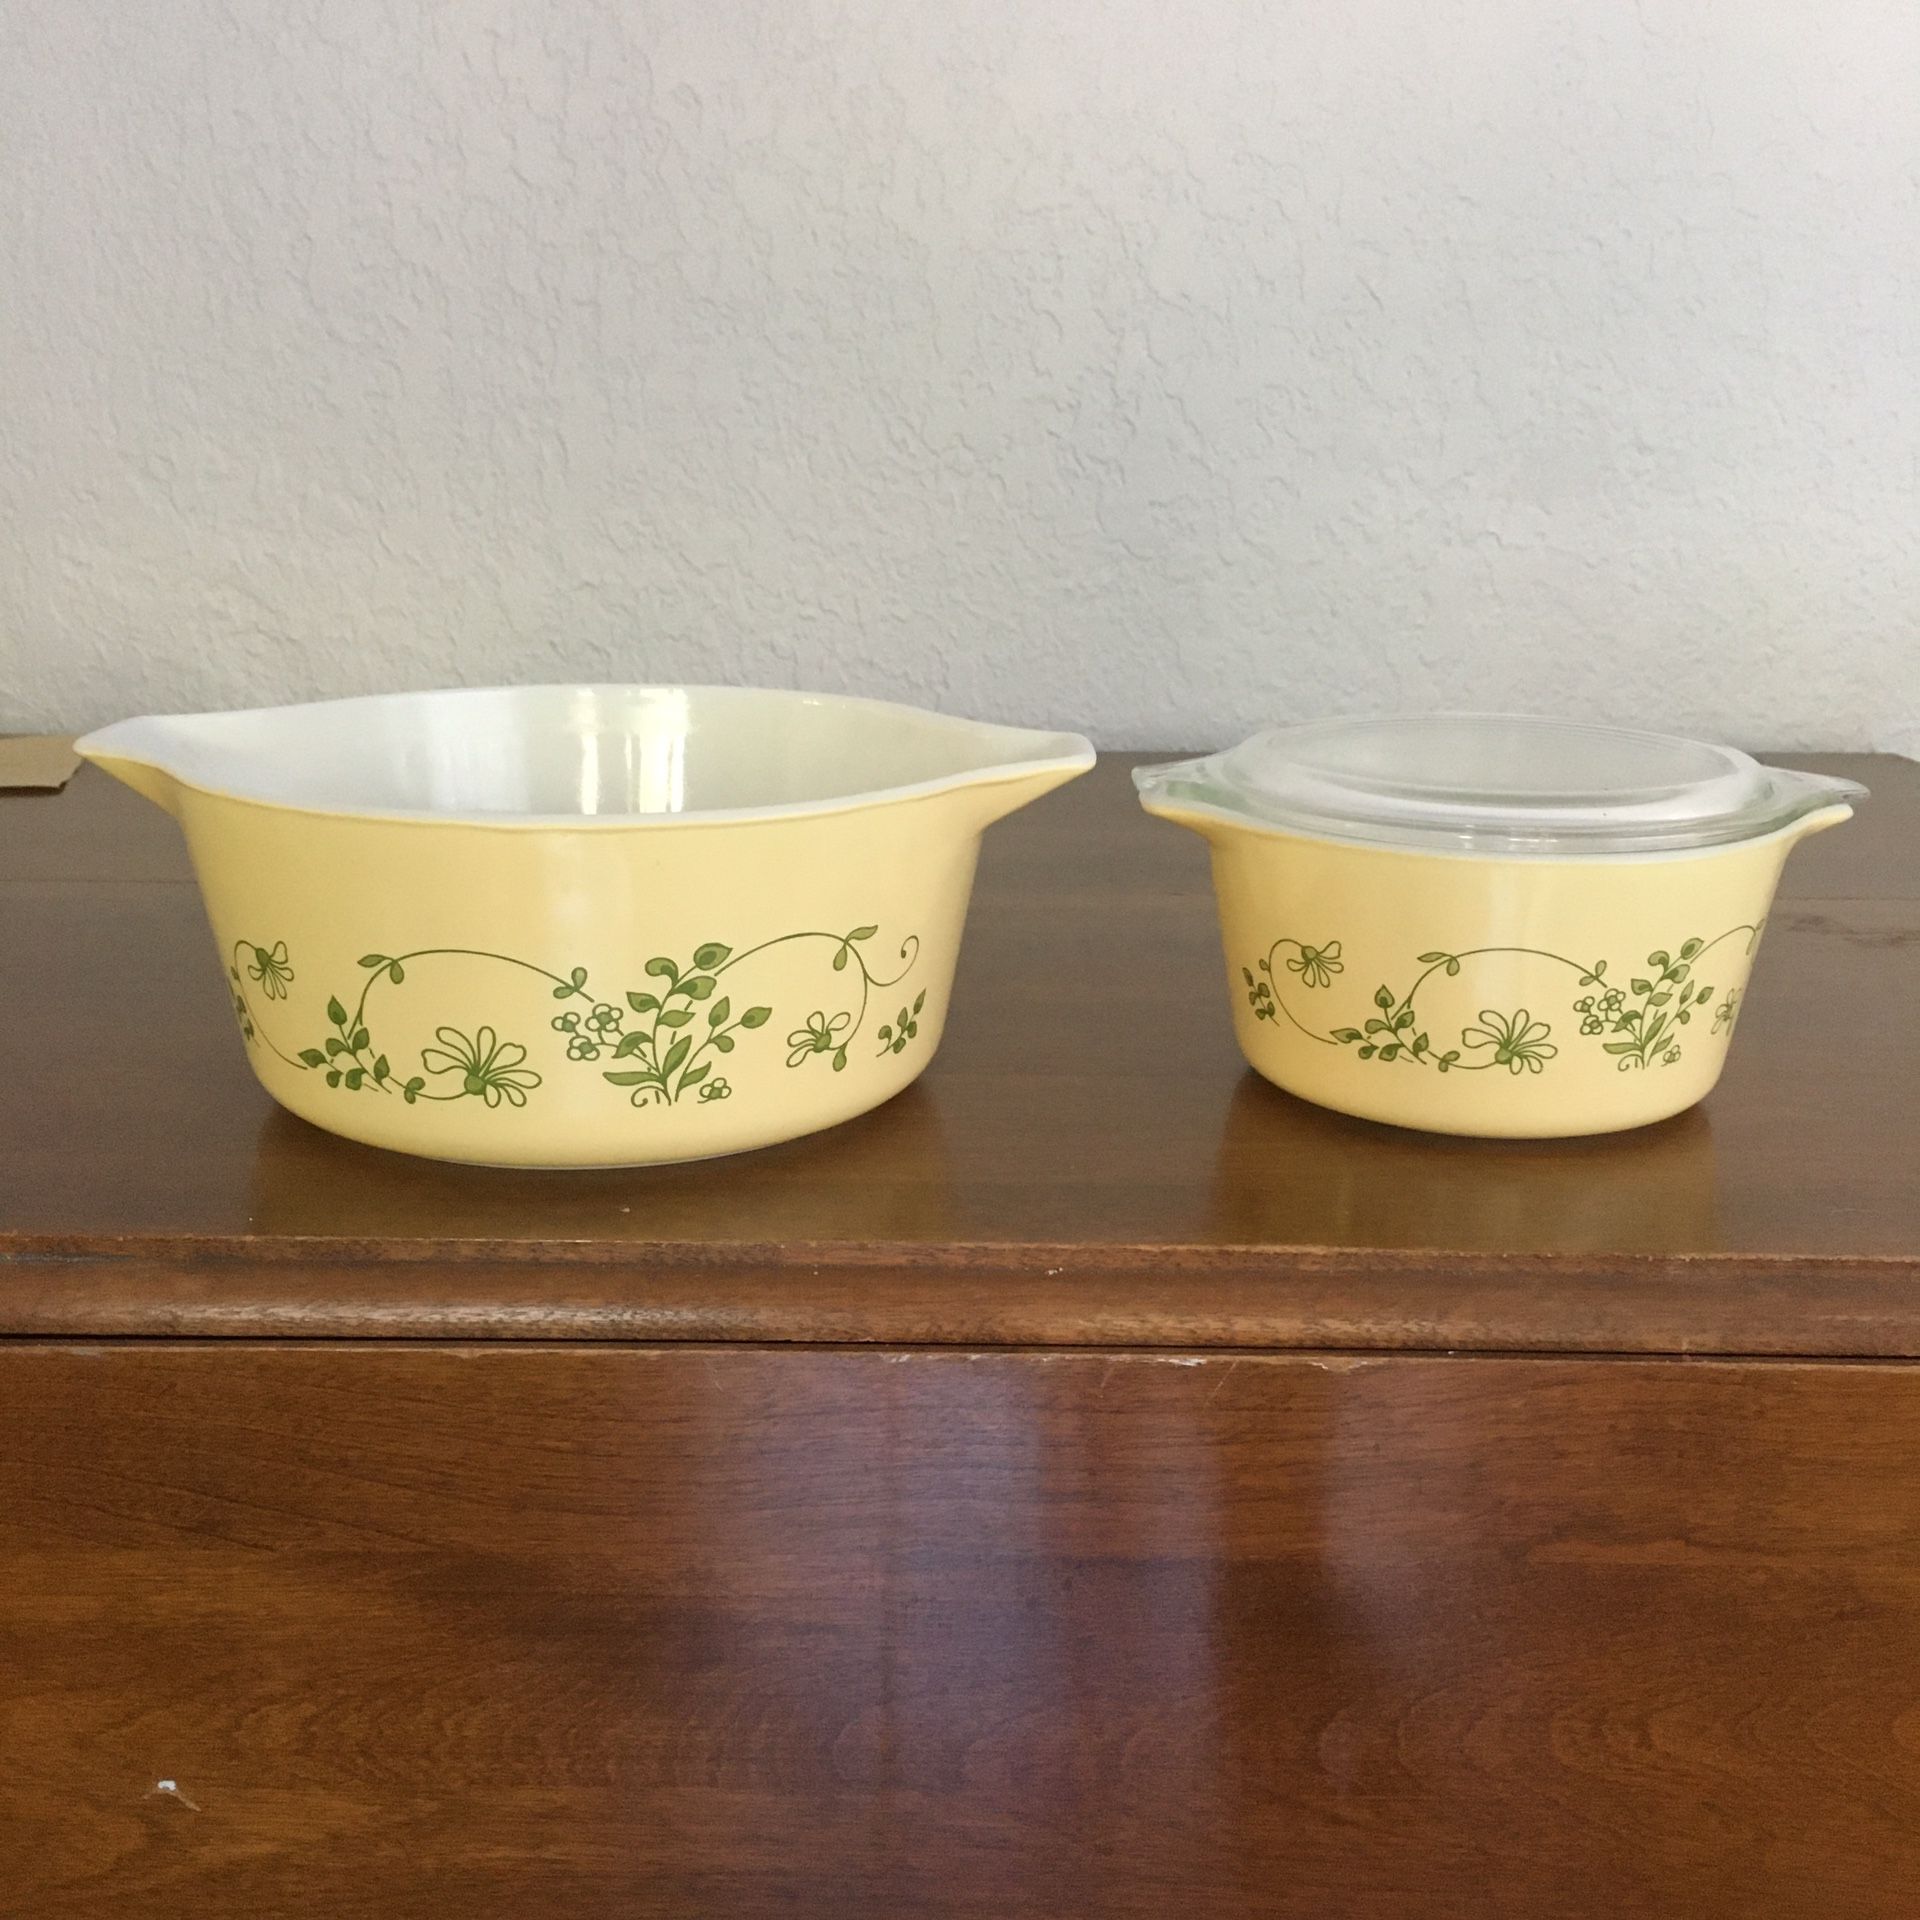 Pyrex bowls, Shenandoah design, 2 1/2 quart and 1 quart size with lid